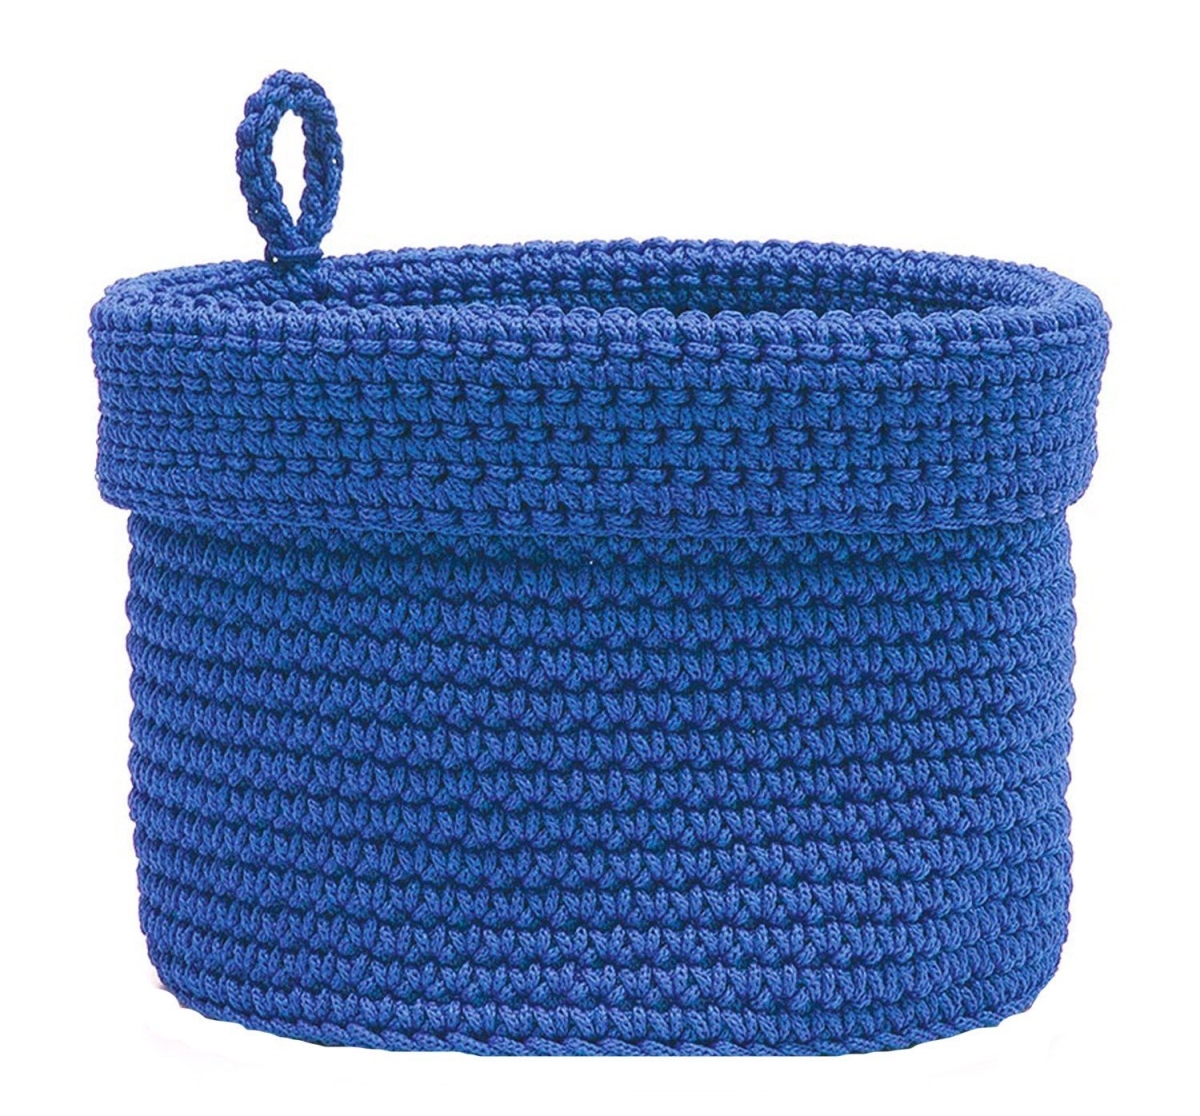 Mc-1040cb 10 X 10 In. Mode Crochet Basket With Loop, Cobalt Blue